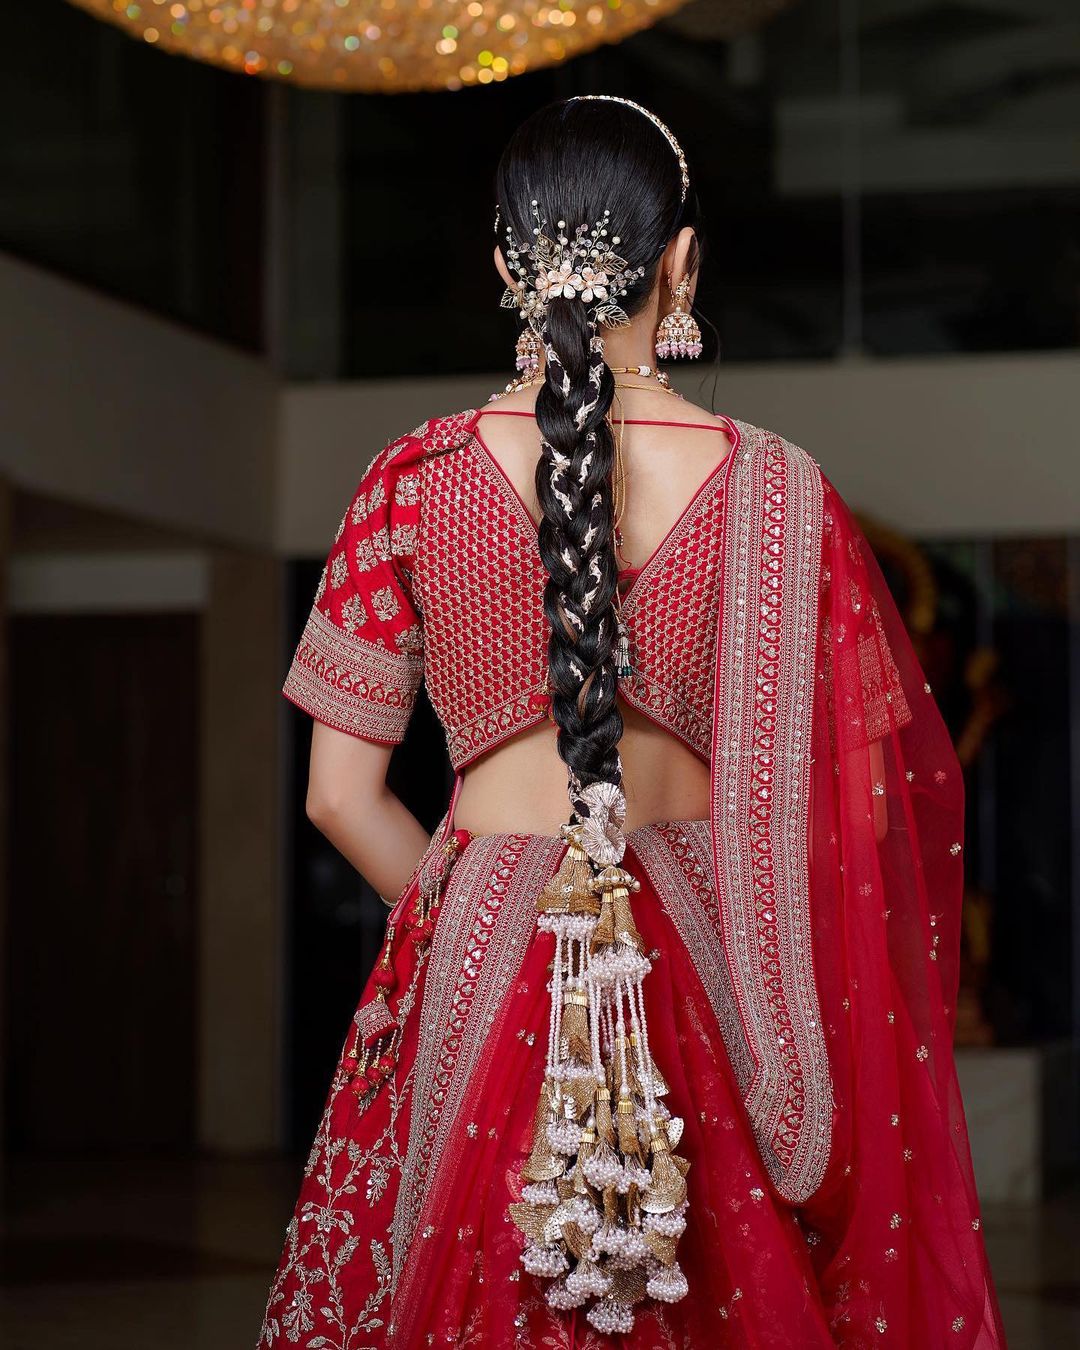 5 Fantastic Indian Wedding Hairstyles To Look You Cool  Indian hairstyles  Hairstyles for gowns Indian bridal hairstyles